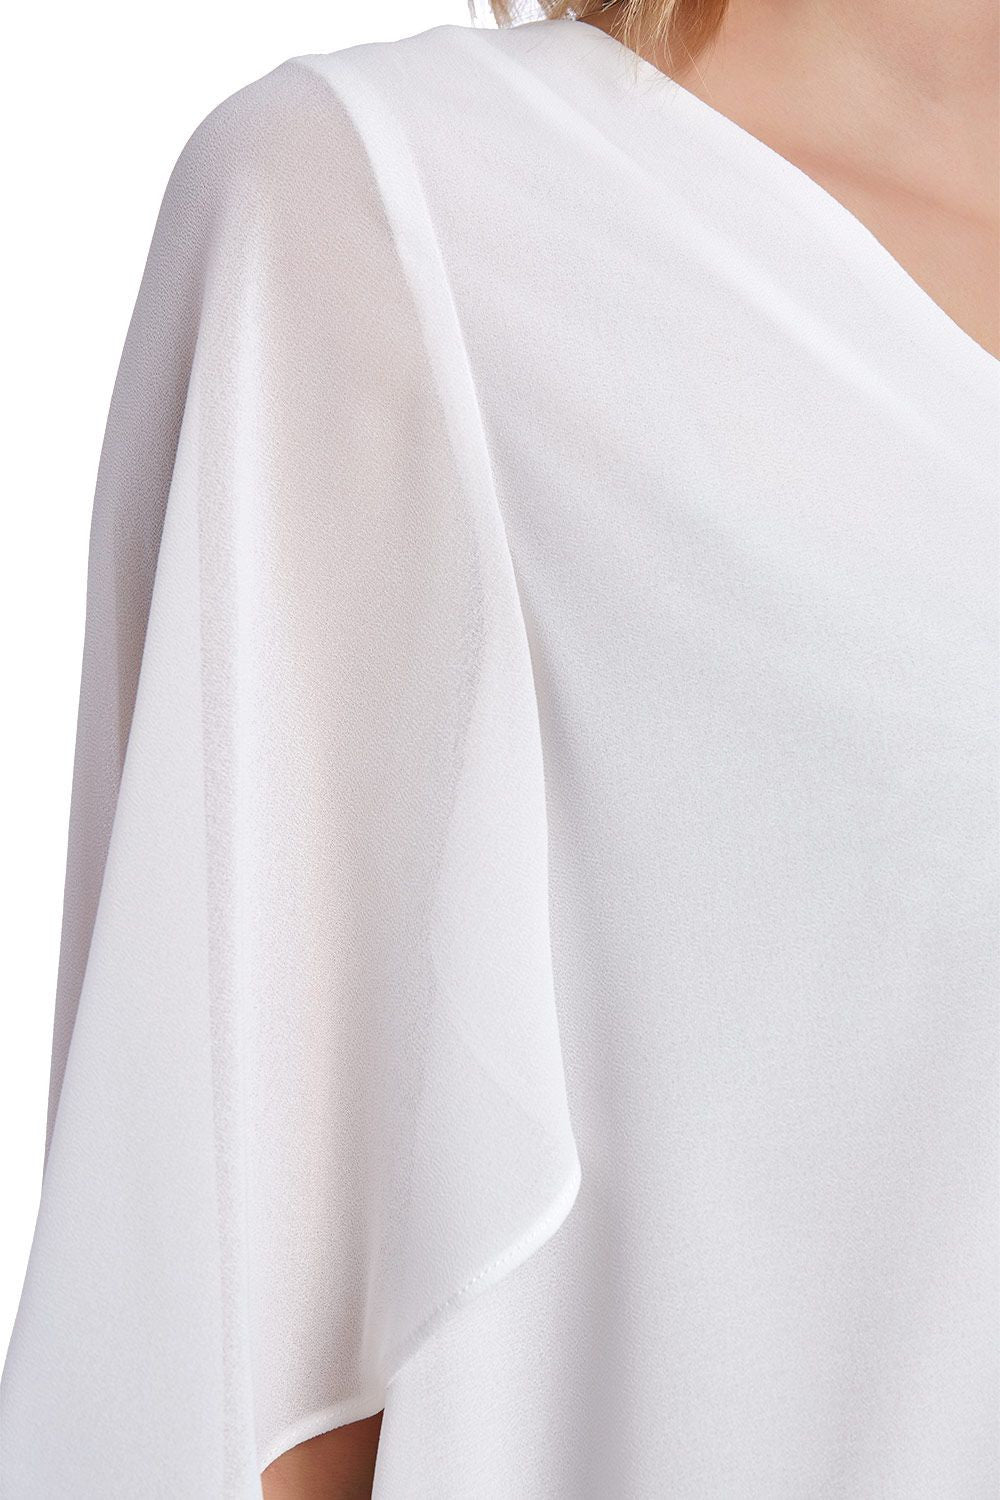 azure_boutique15 - White blouse with ruffle 3/4 sleeve